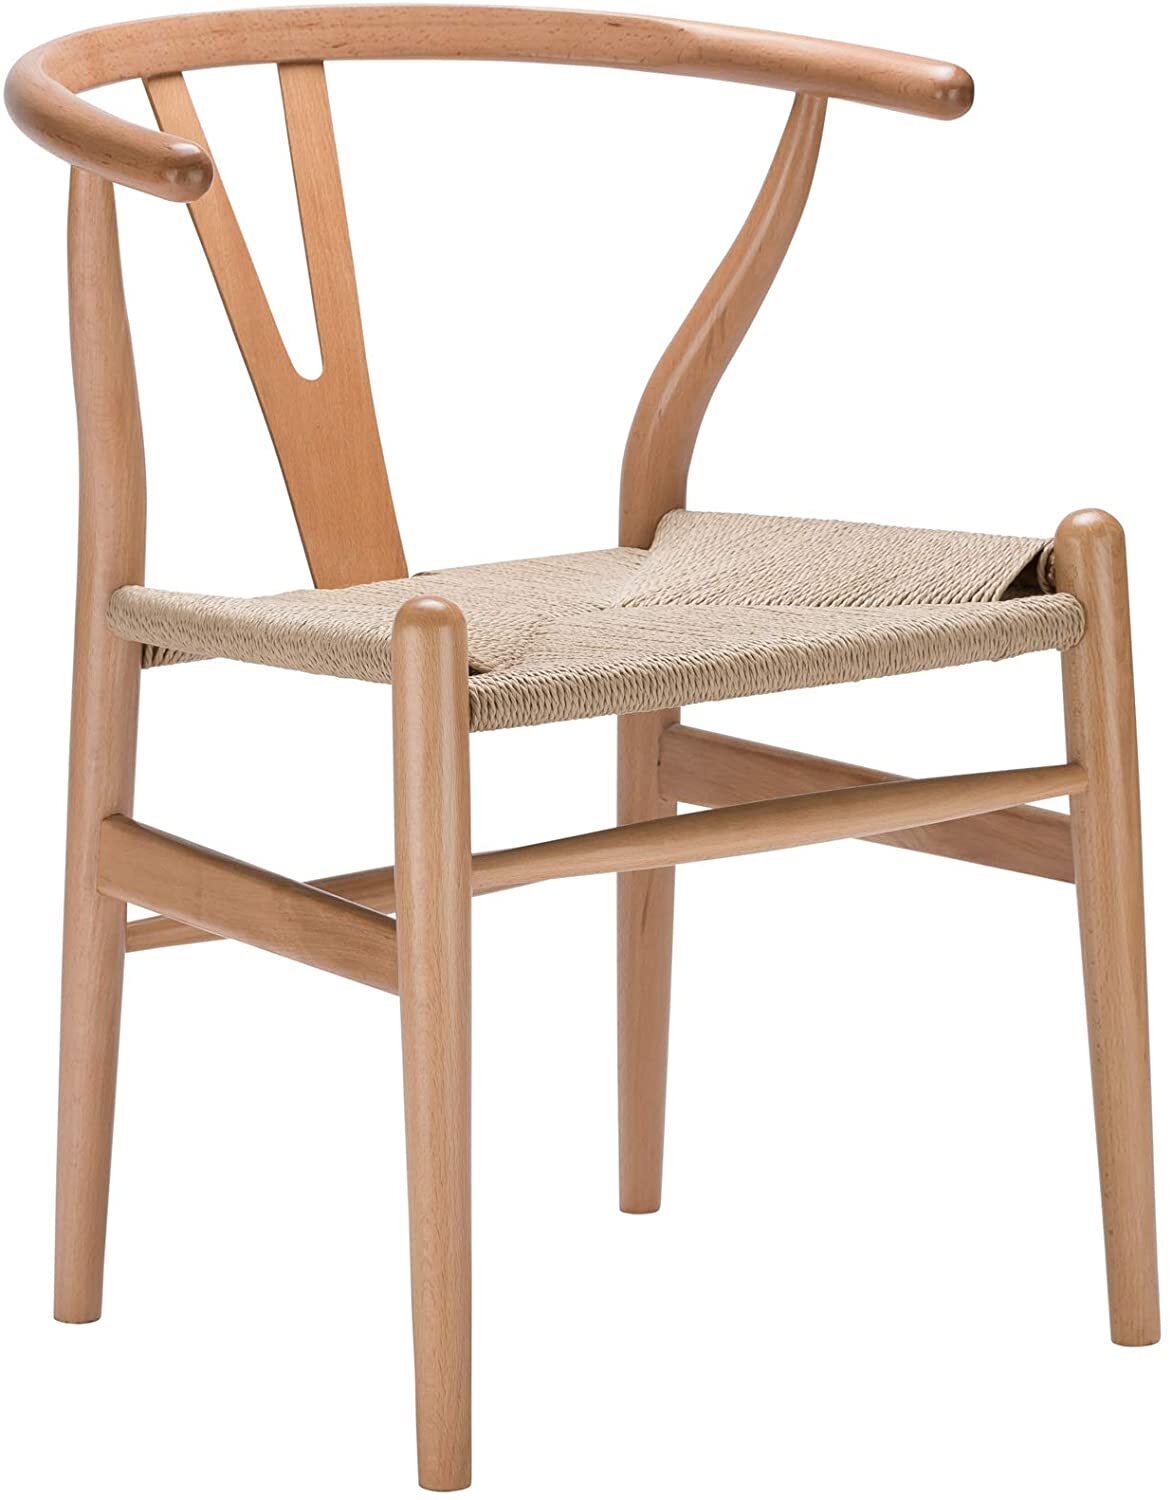 Iconic Danish chairs vintage